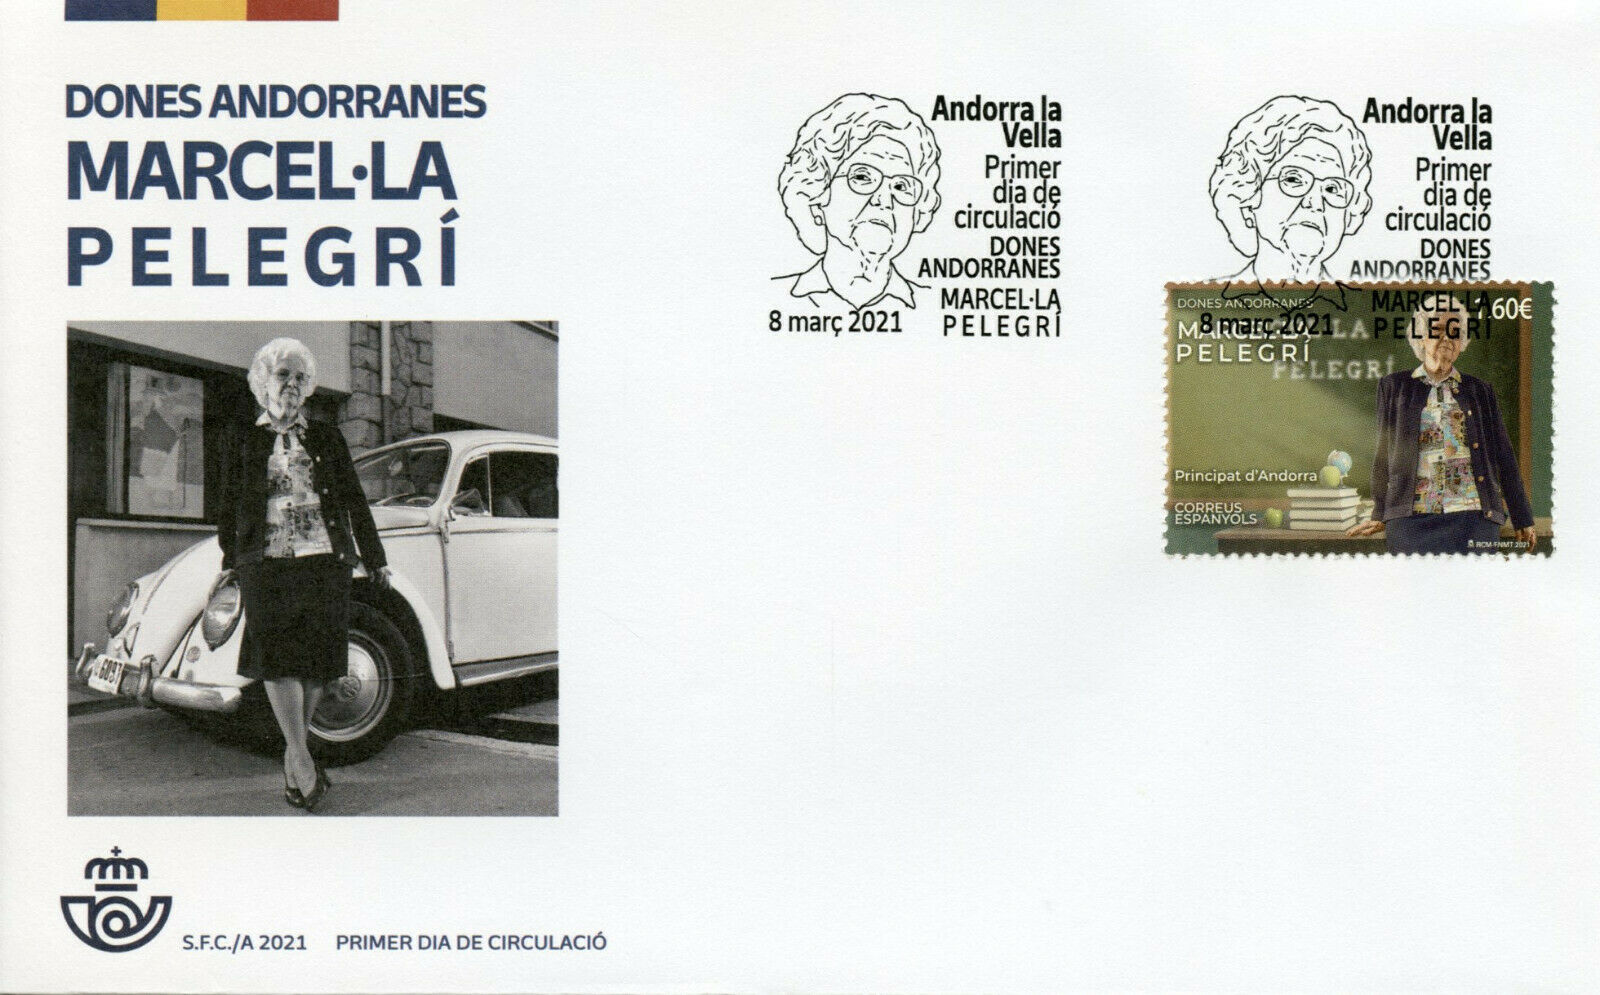 Spanish Andorra Education Stamps 2021 FDC Marcel La Pelegri People 1v Set